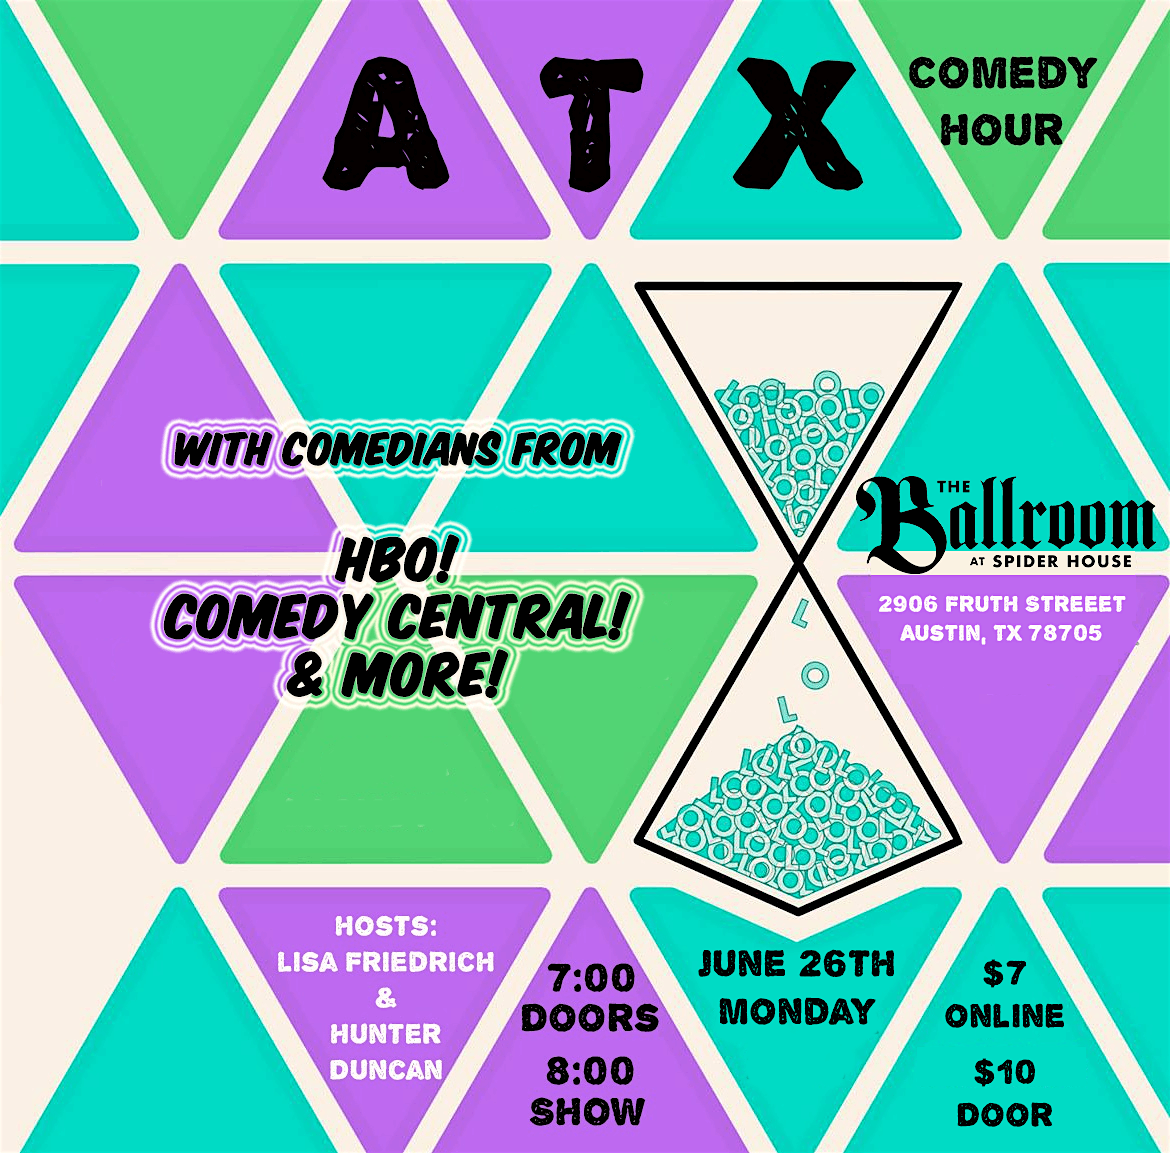 ATX Comedy Hour: NOVEMBER THRILL!